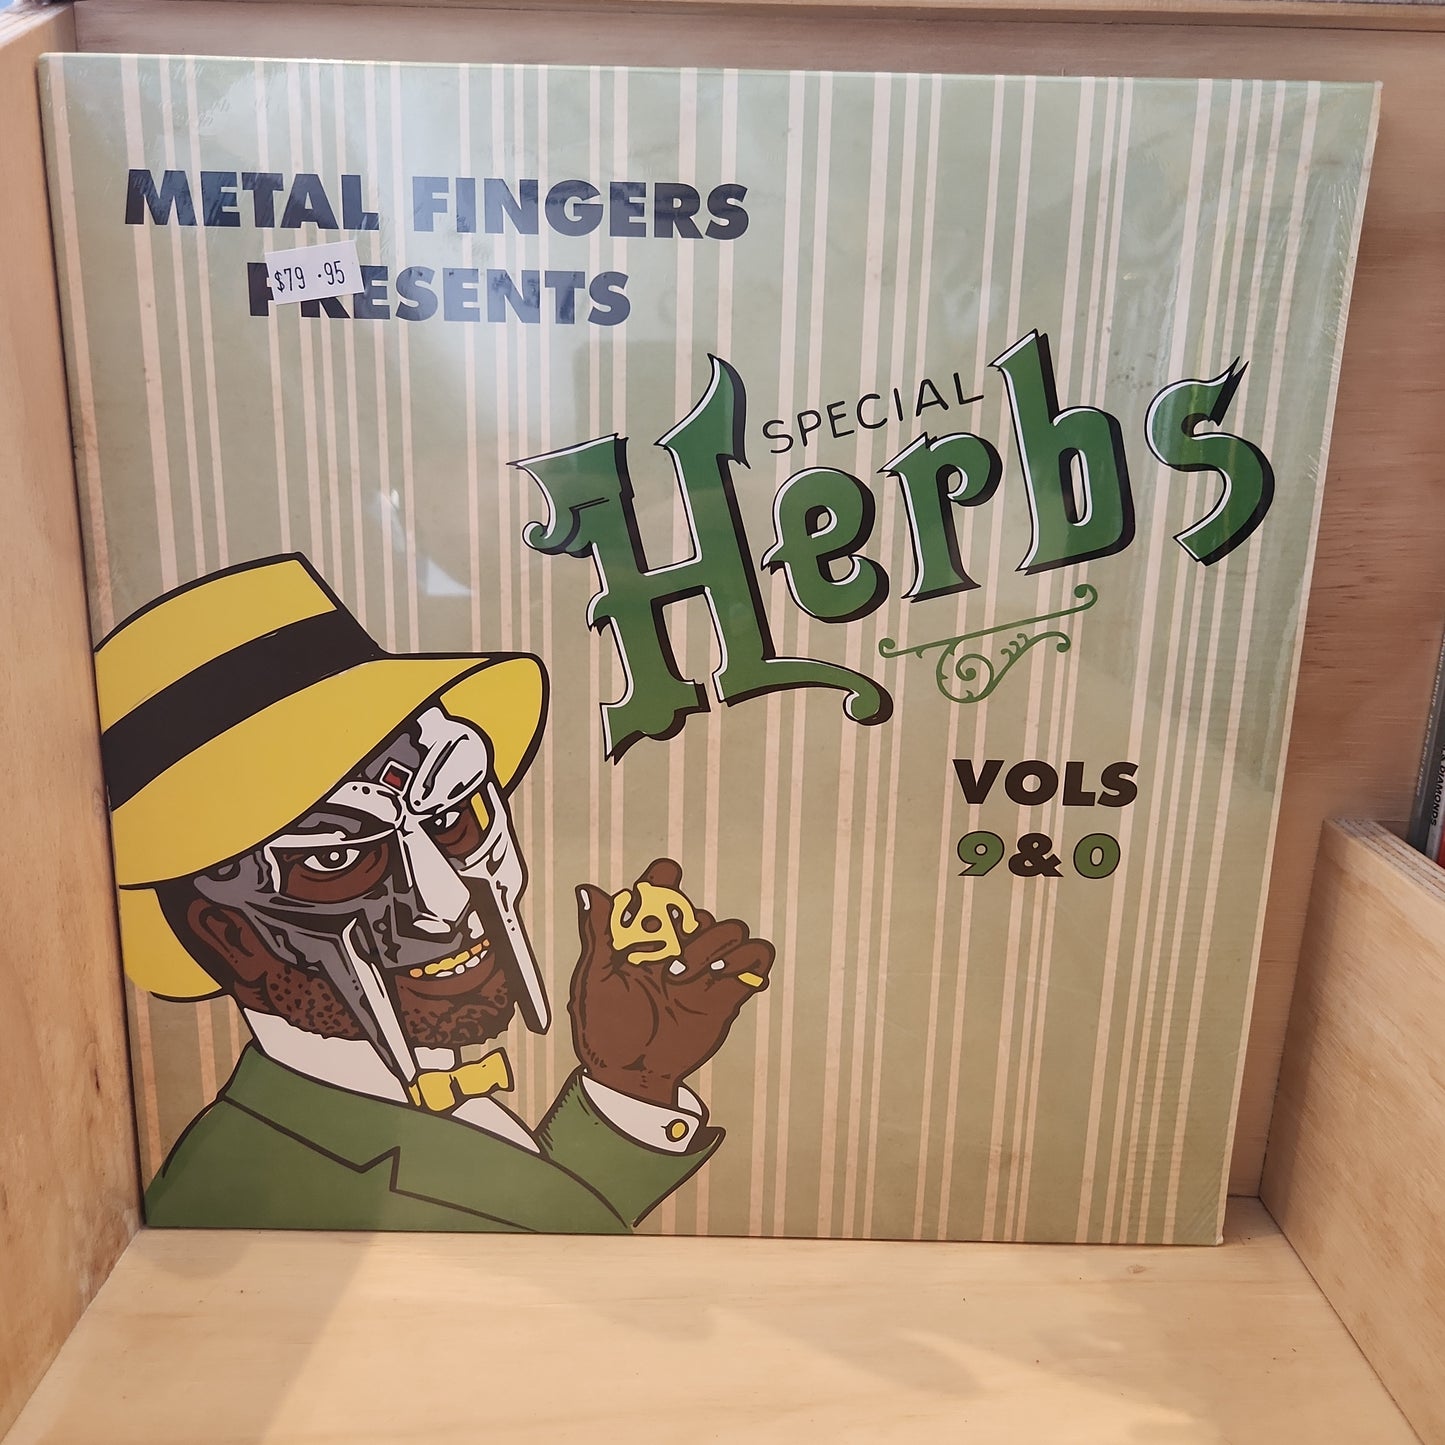 MF Doom - Metal Fingers Presents Special Herbs Vol 9 & 0 - Vinyl LP